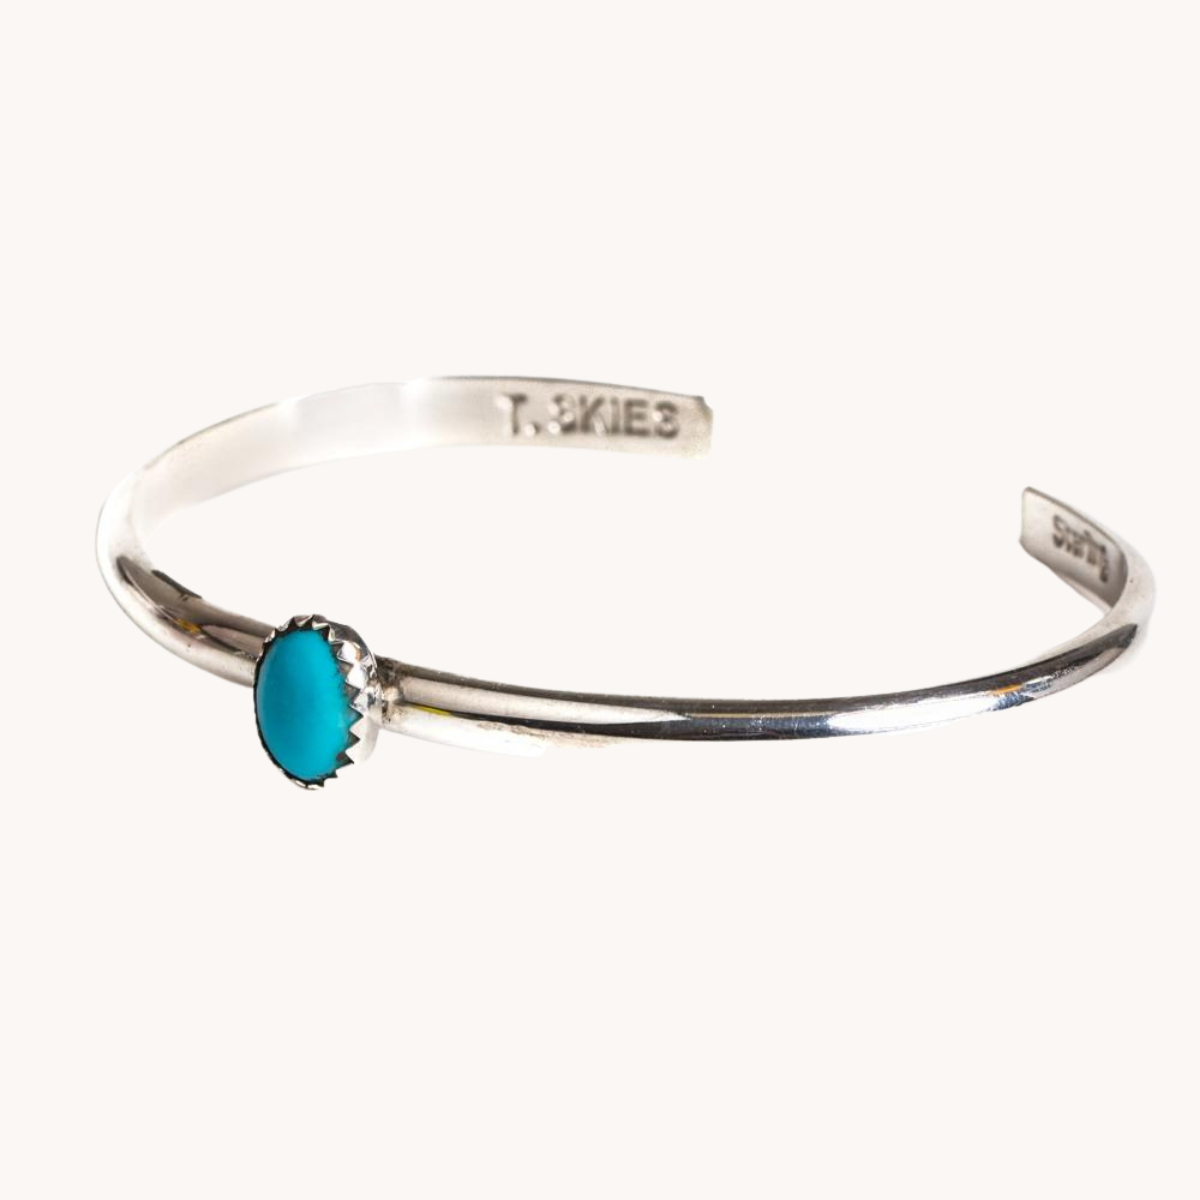 Turquoise Stone Bracelet by TSkies